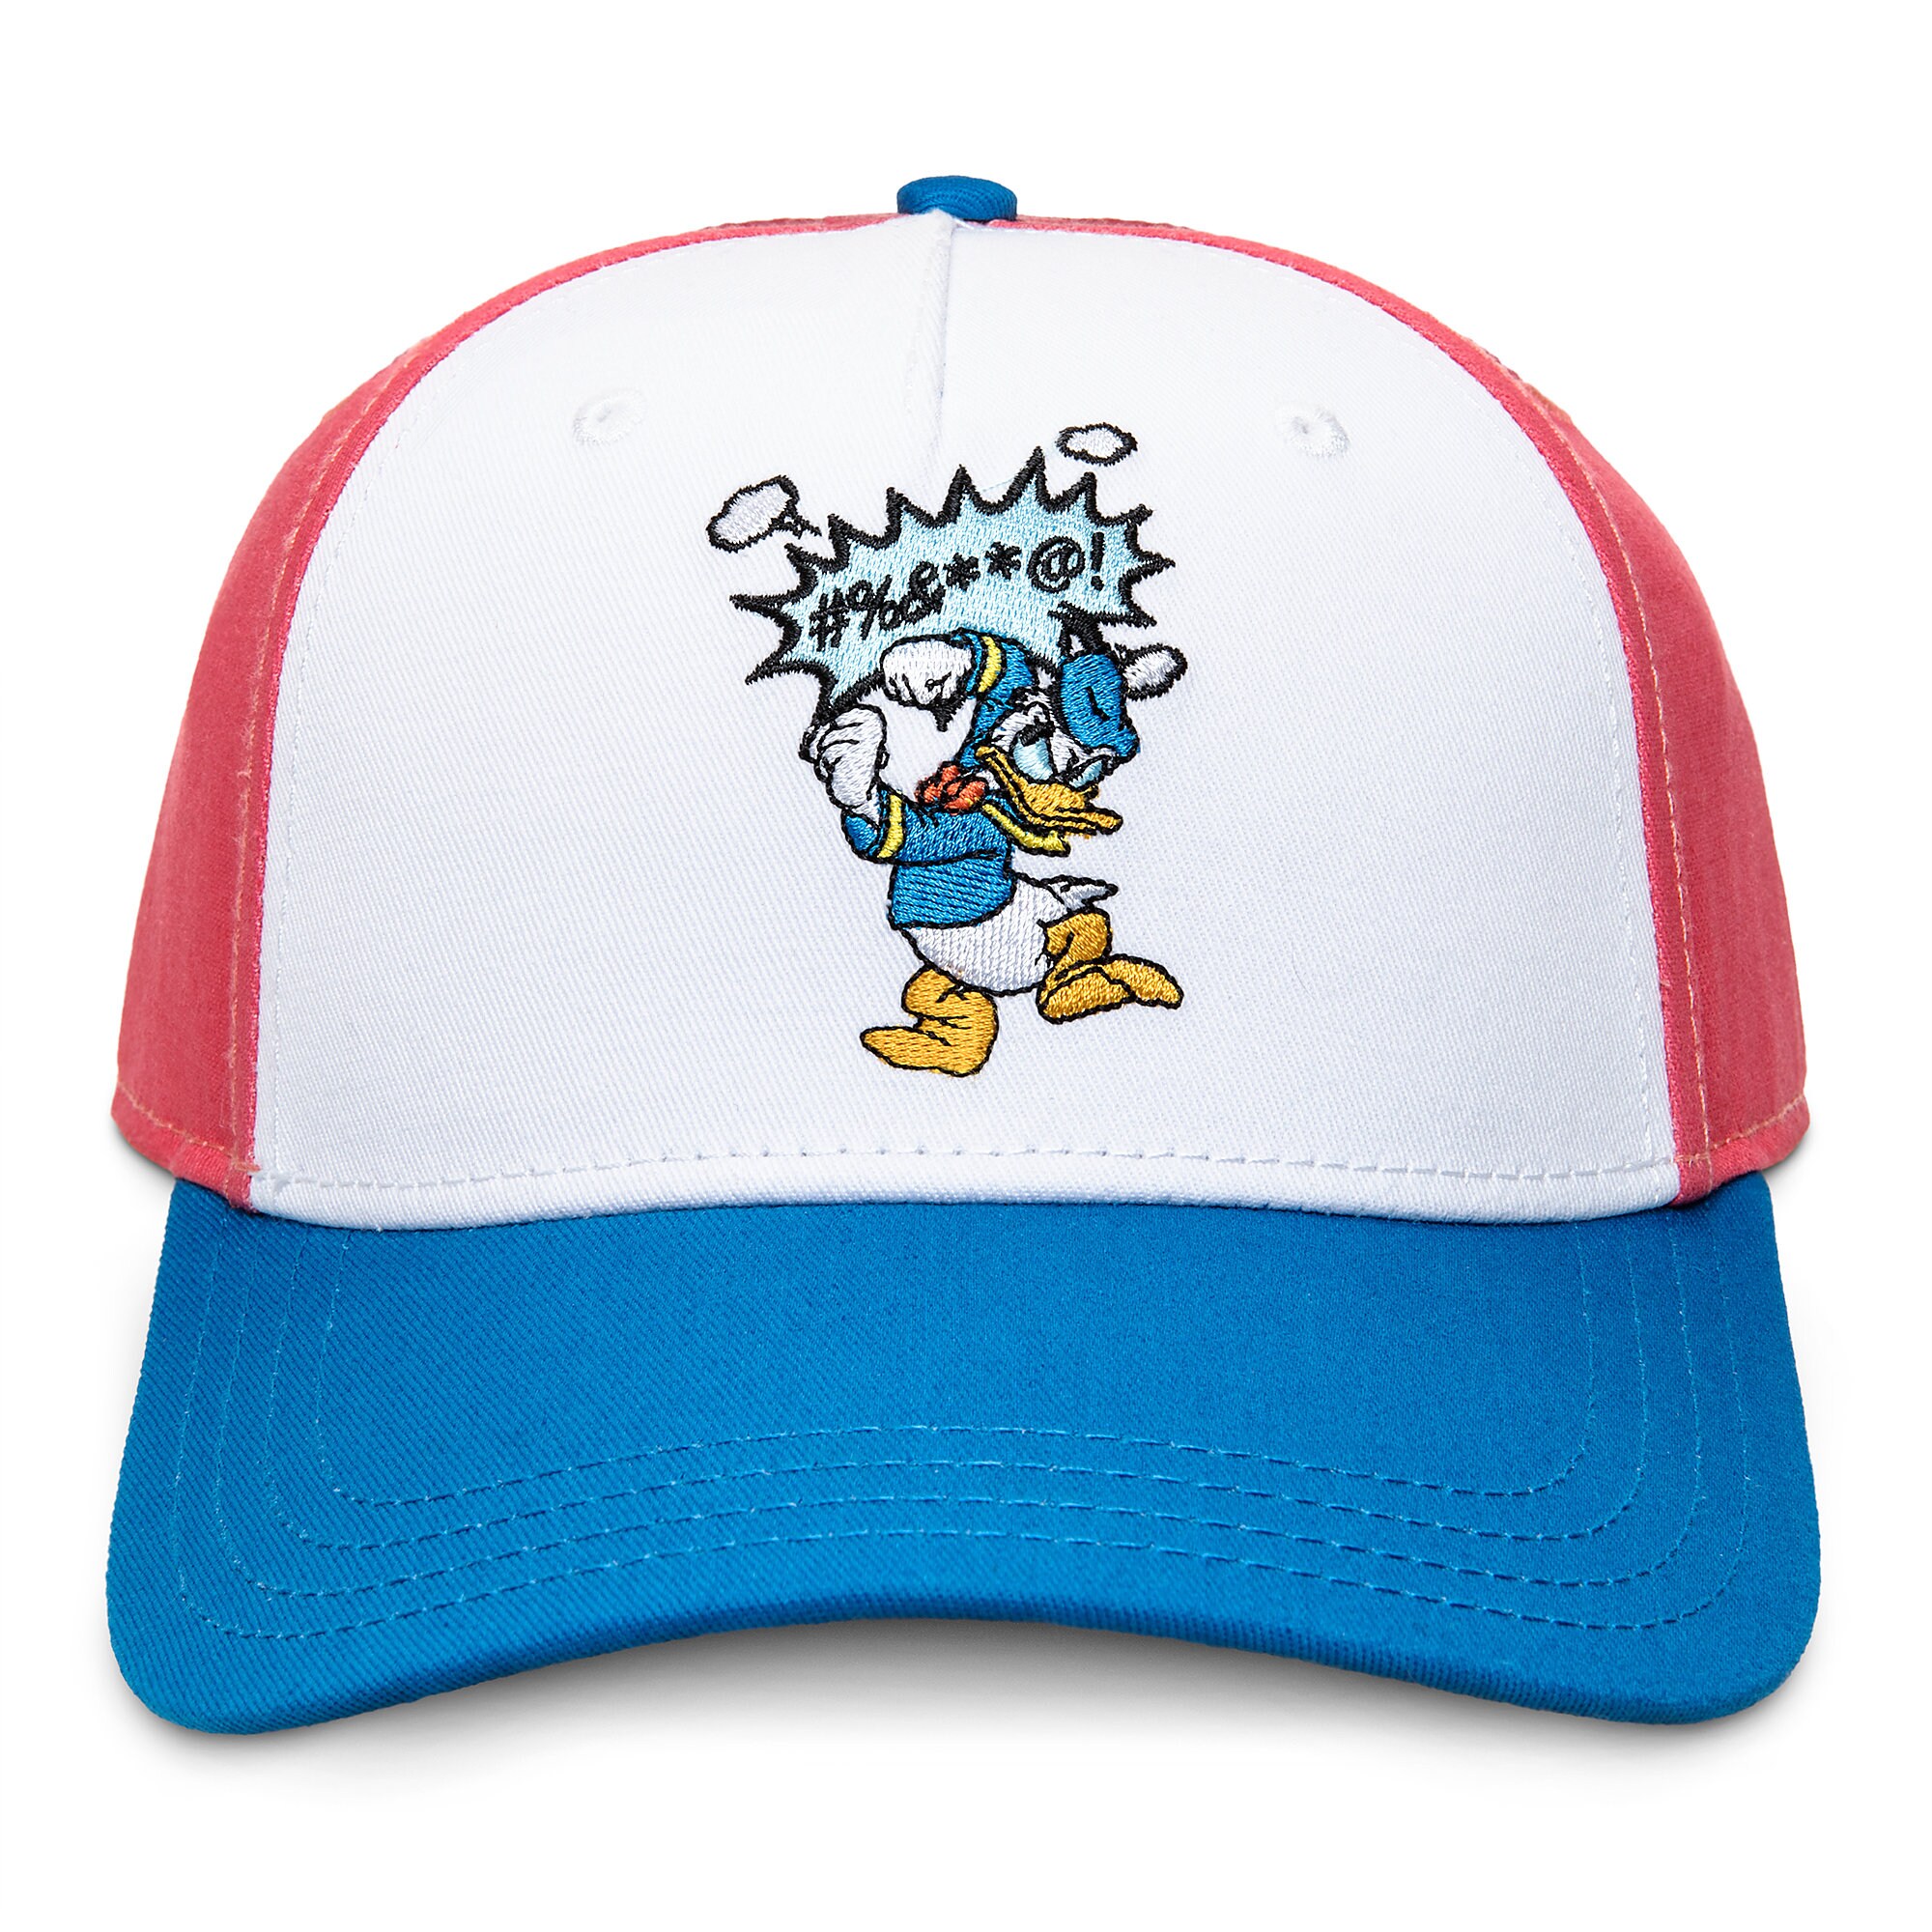 Donald Duck Baseball Cap for Adults